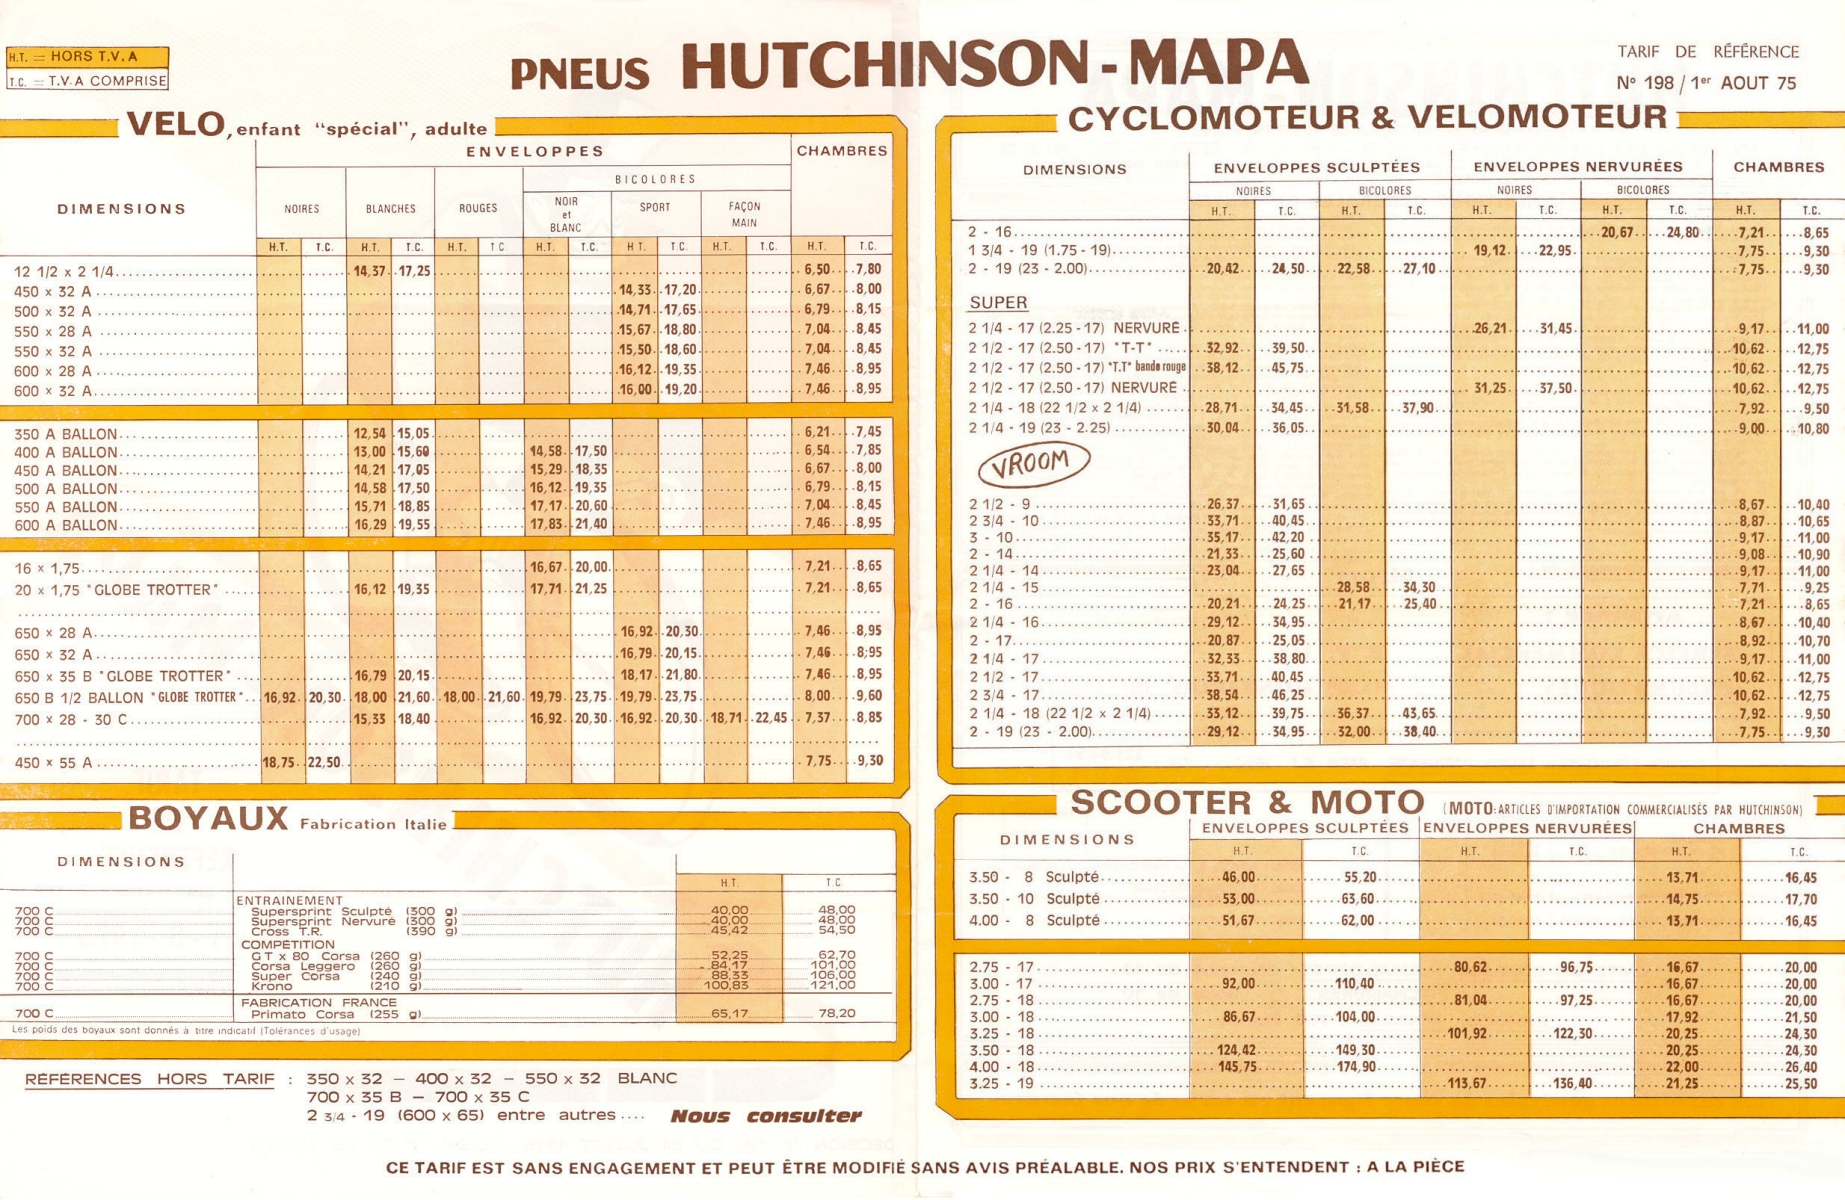 Hutchinson brochure (08-1975)